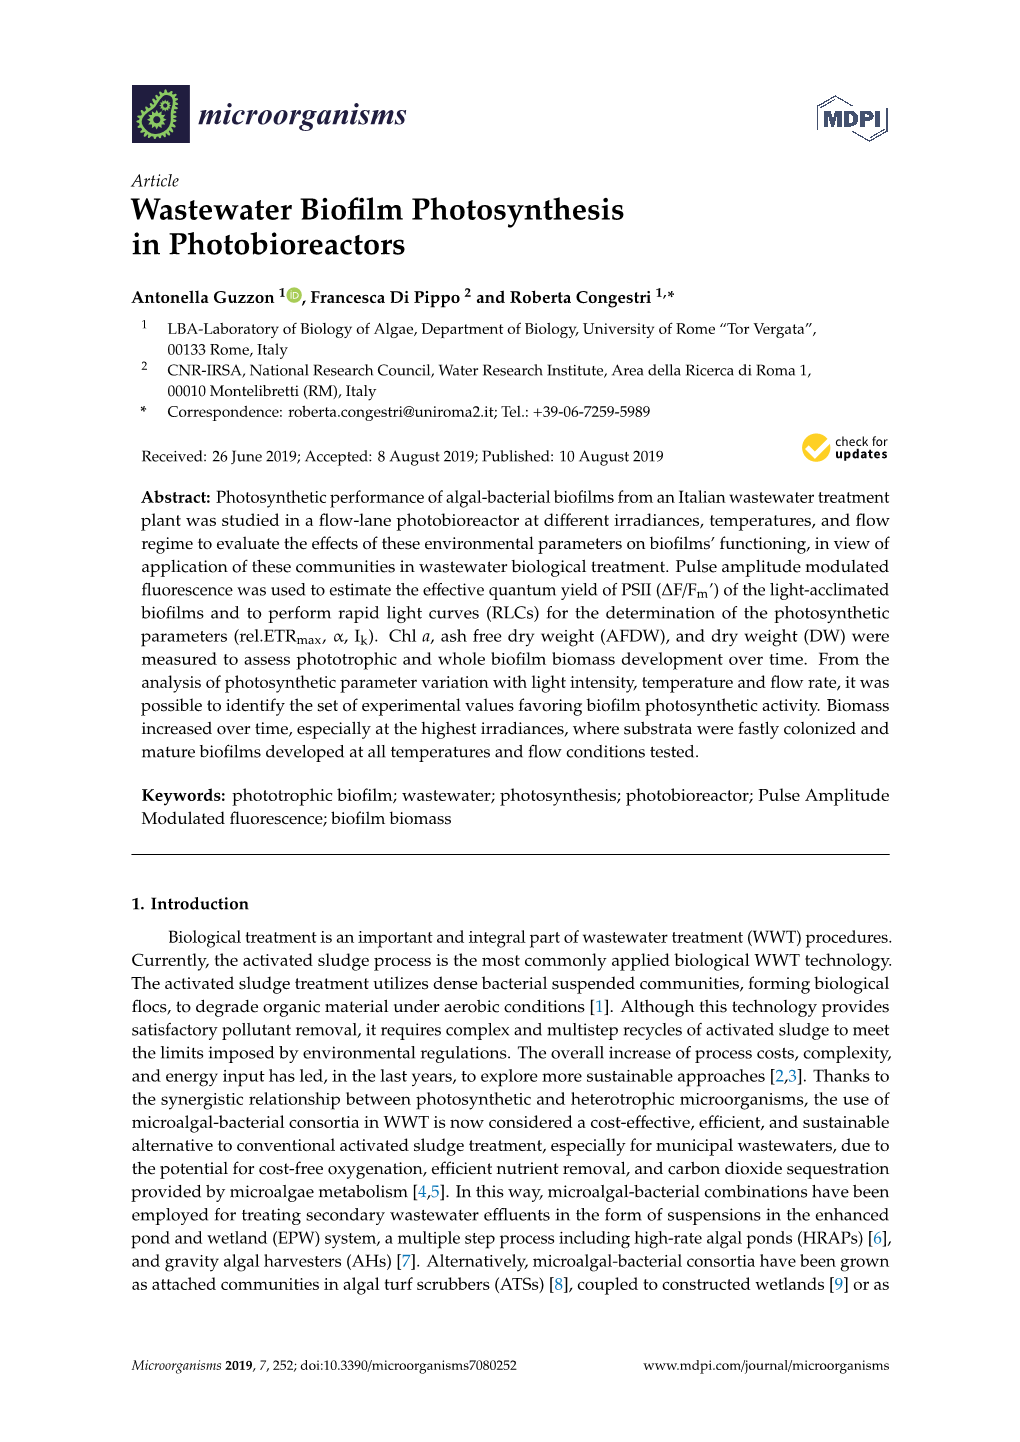 Wastewater Biofilm Photosynthesis in Photobioreactors